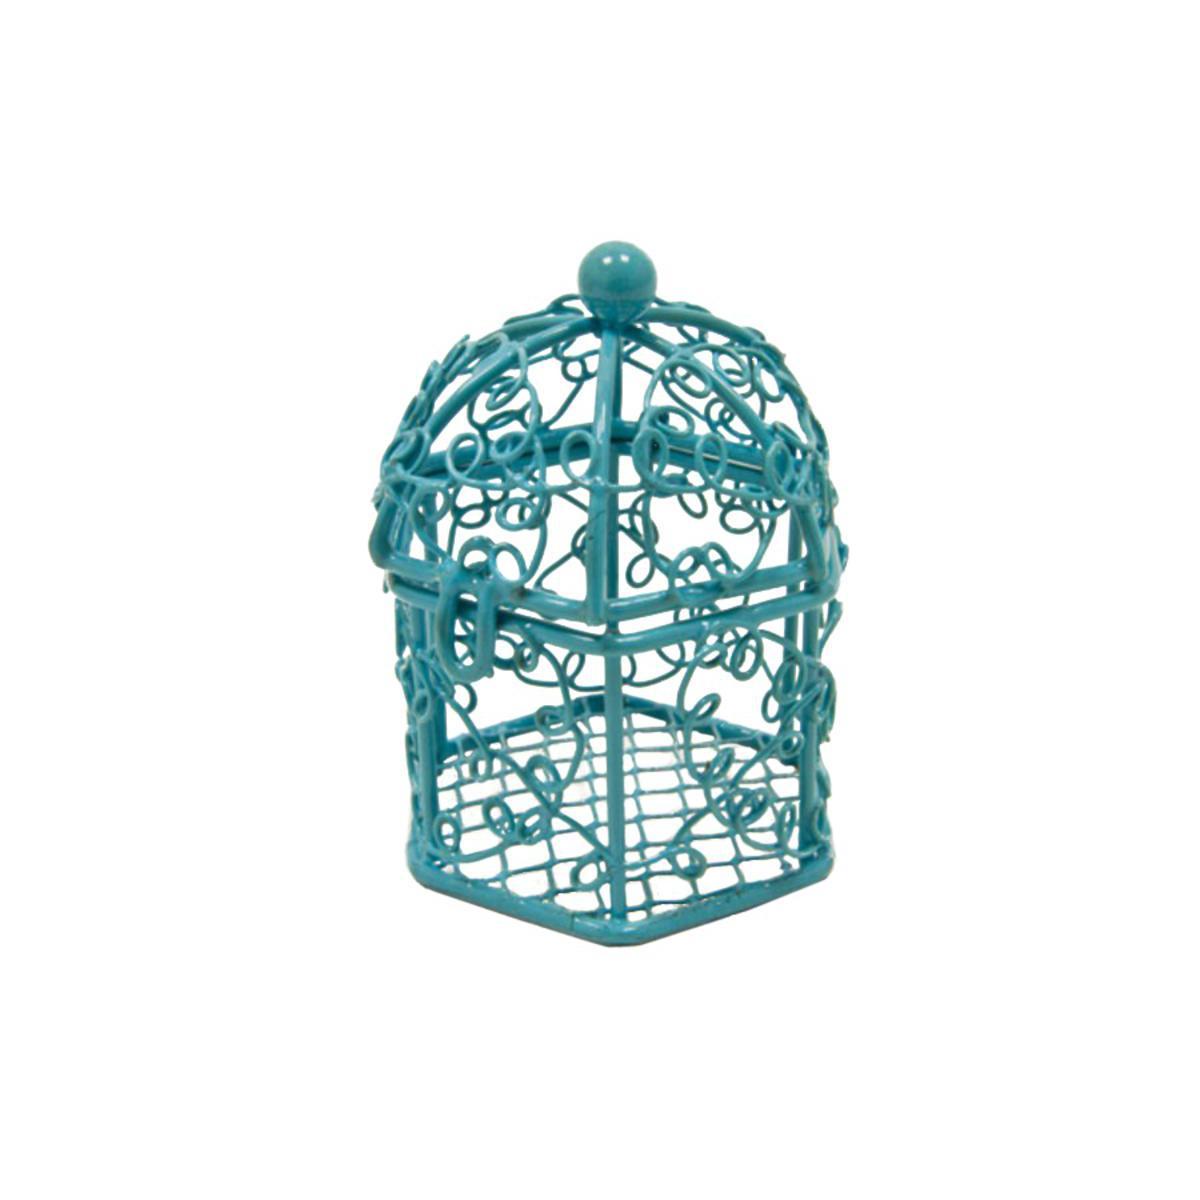 Mini cage - Métal - 5,5x4,5cm - Bleu turquoise